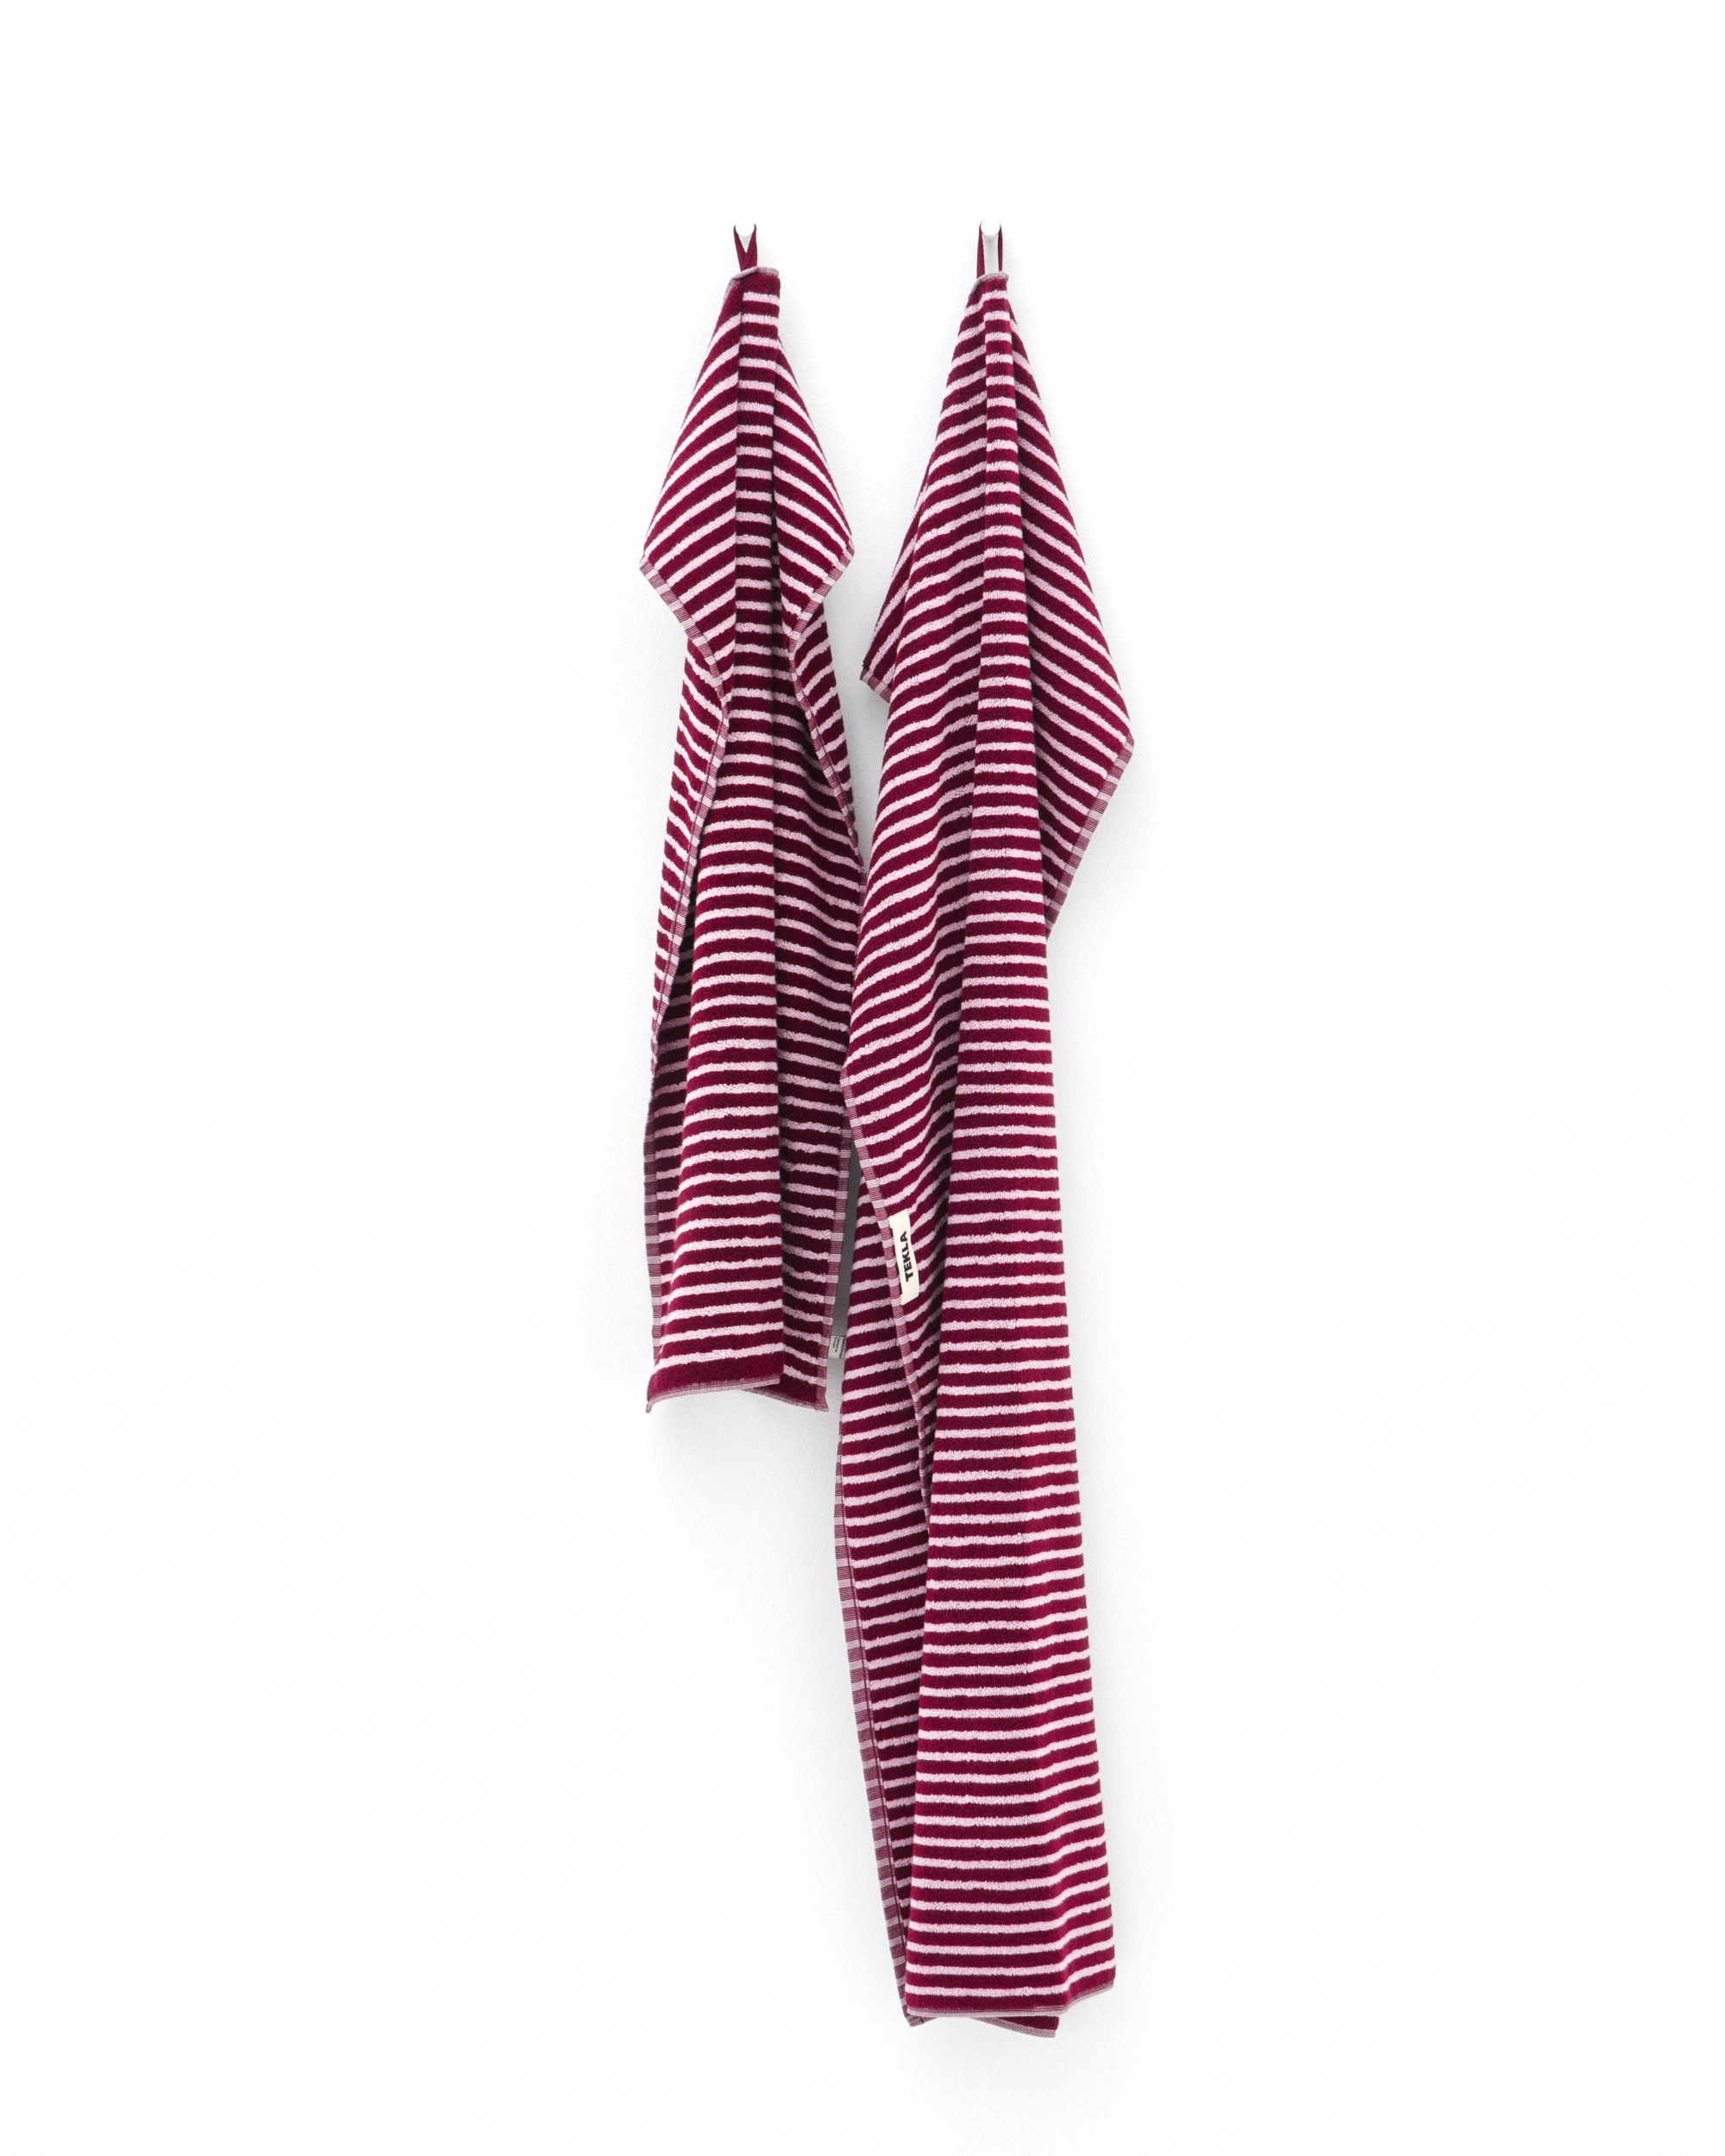 Bath Towel (Striped) - Red / Rose